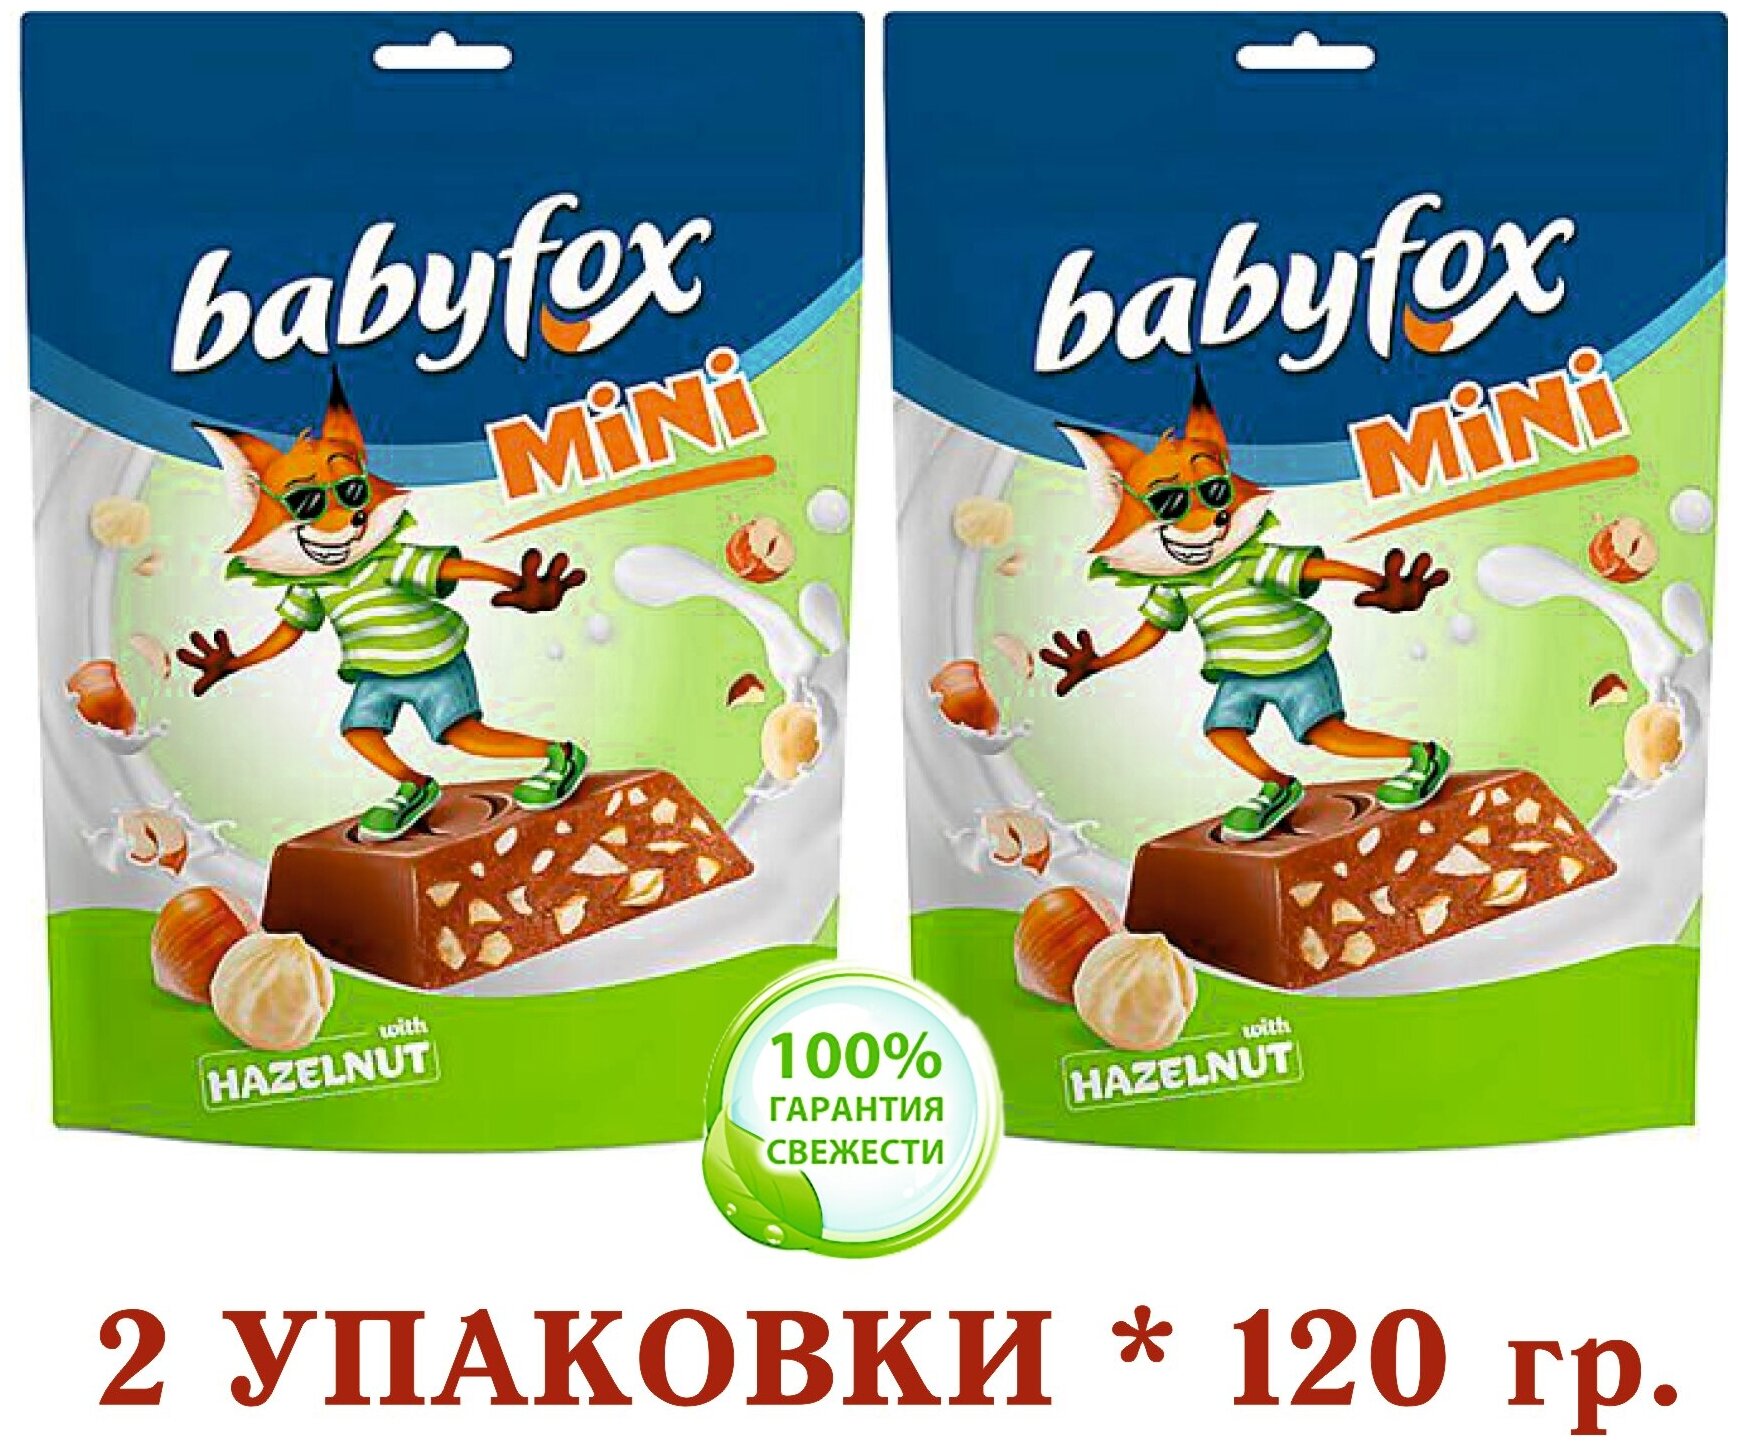 Конфеты шоколадные "BabyFox" (Бэби Фокс) mini с фундуком, 2 уп. * 120 грамм